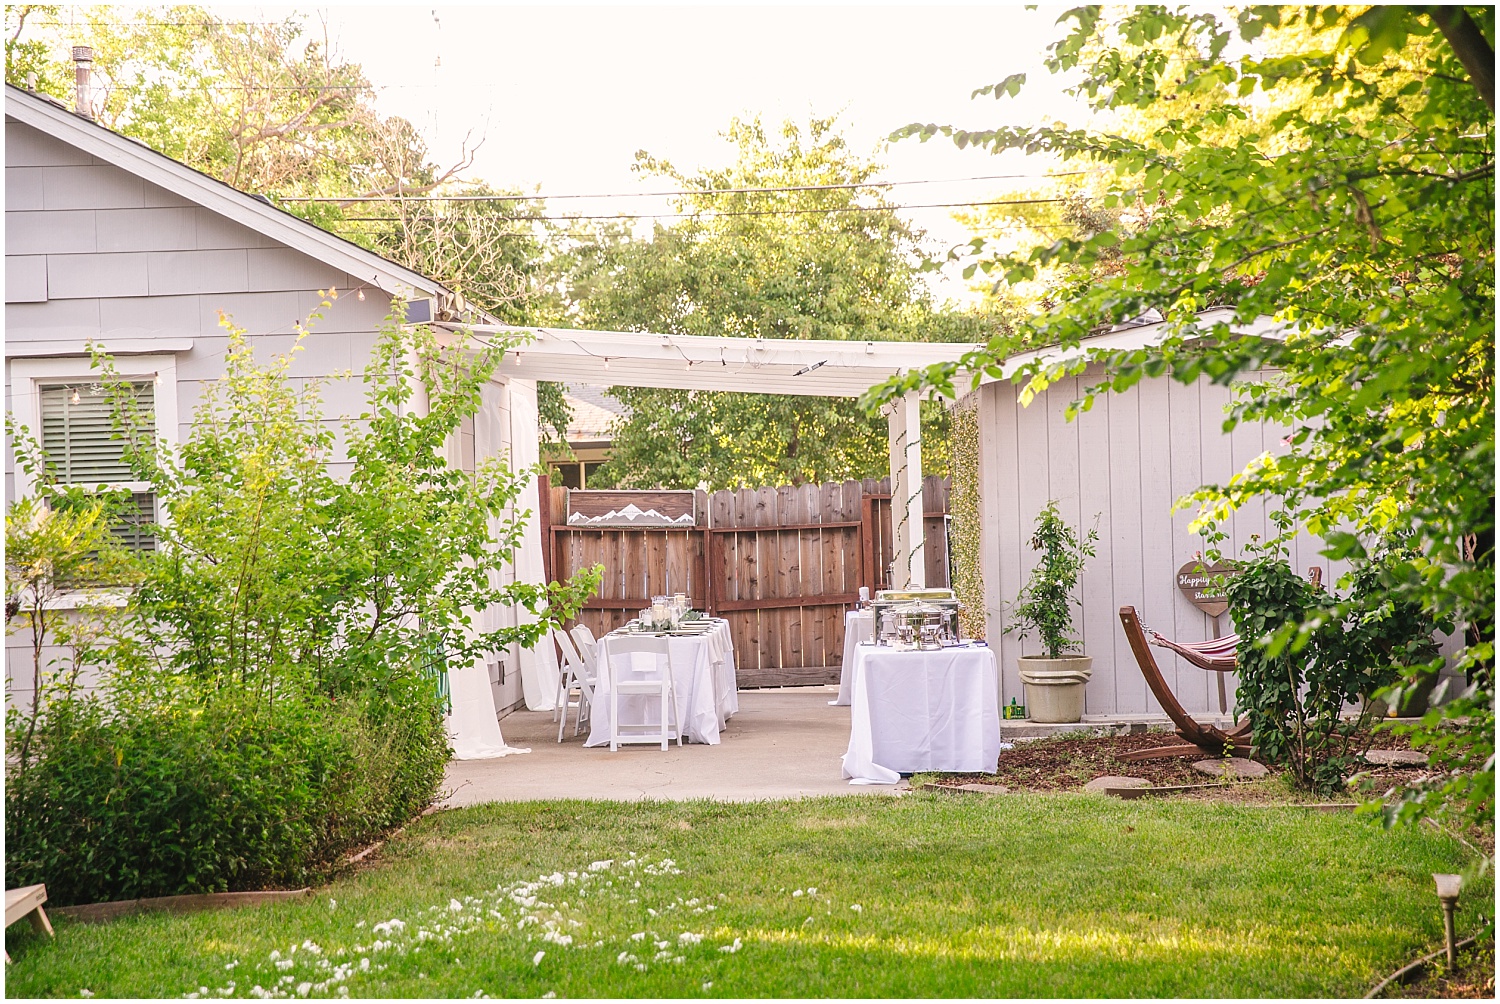 Intimate backyard wedding celebration